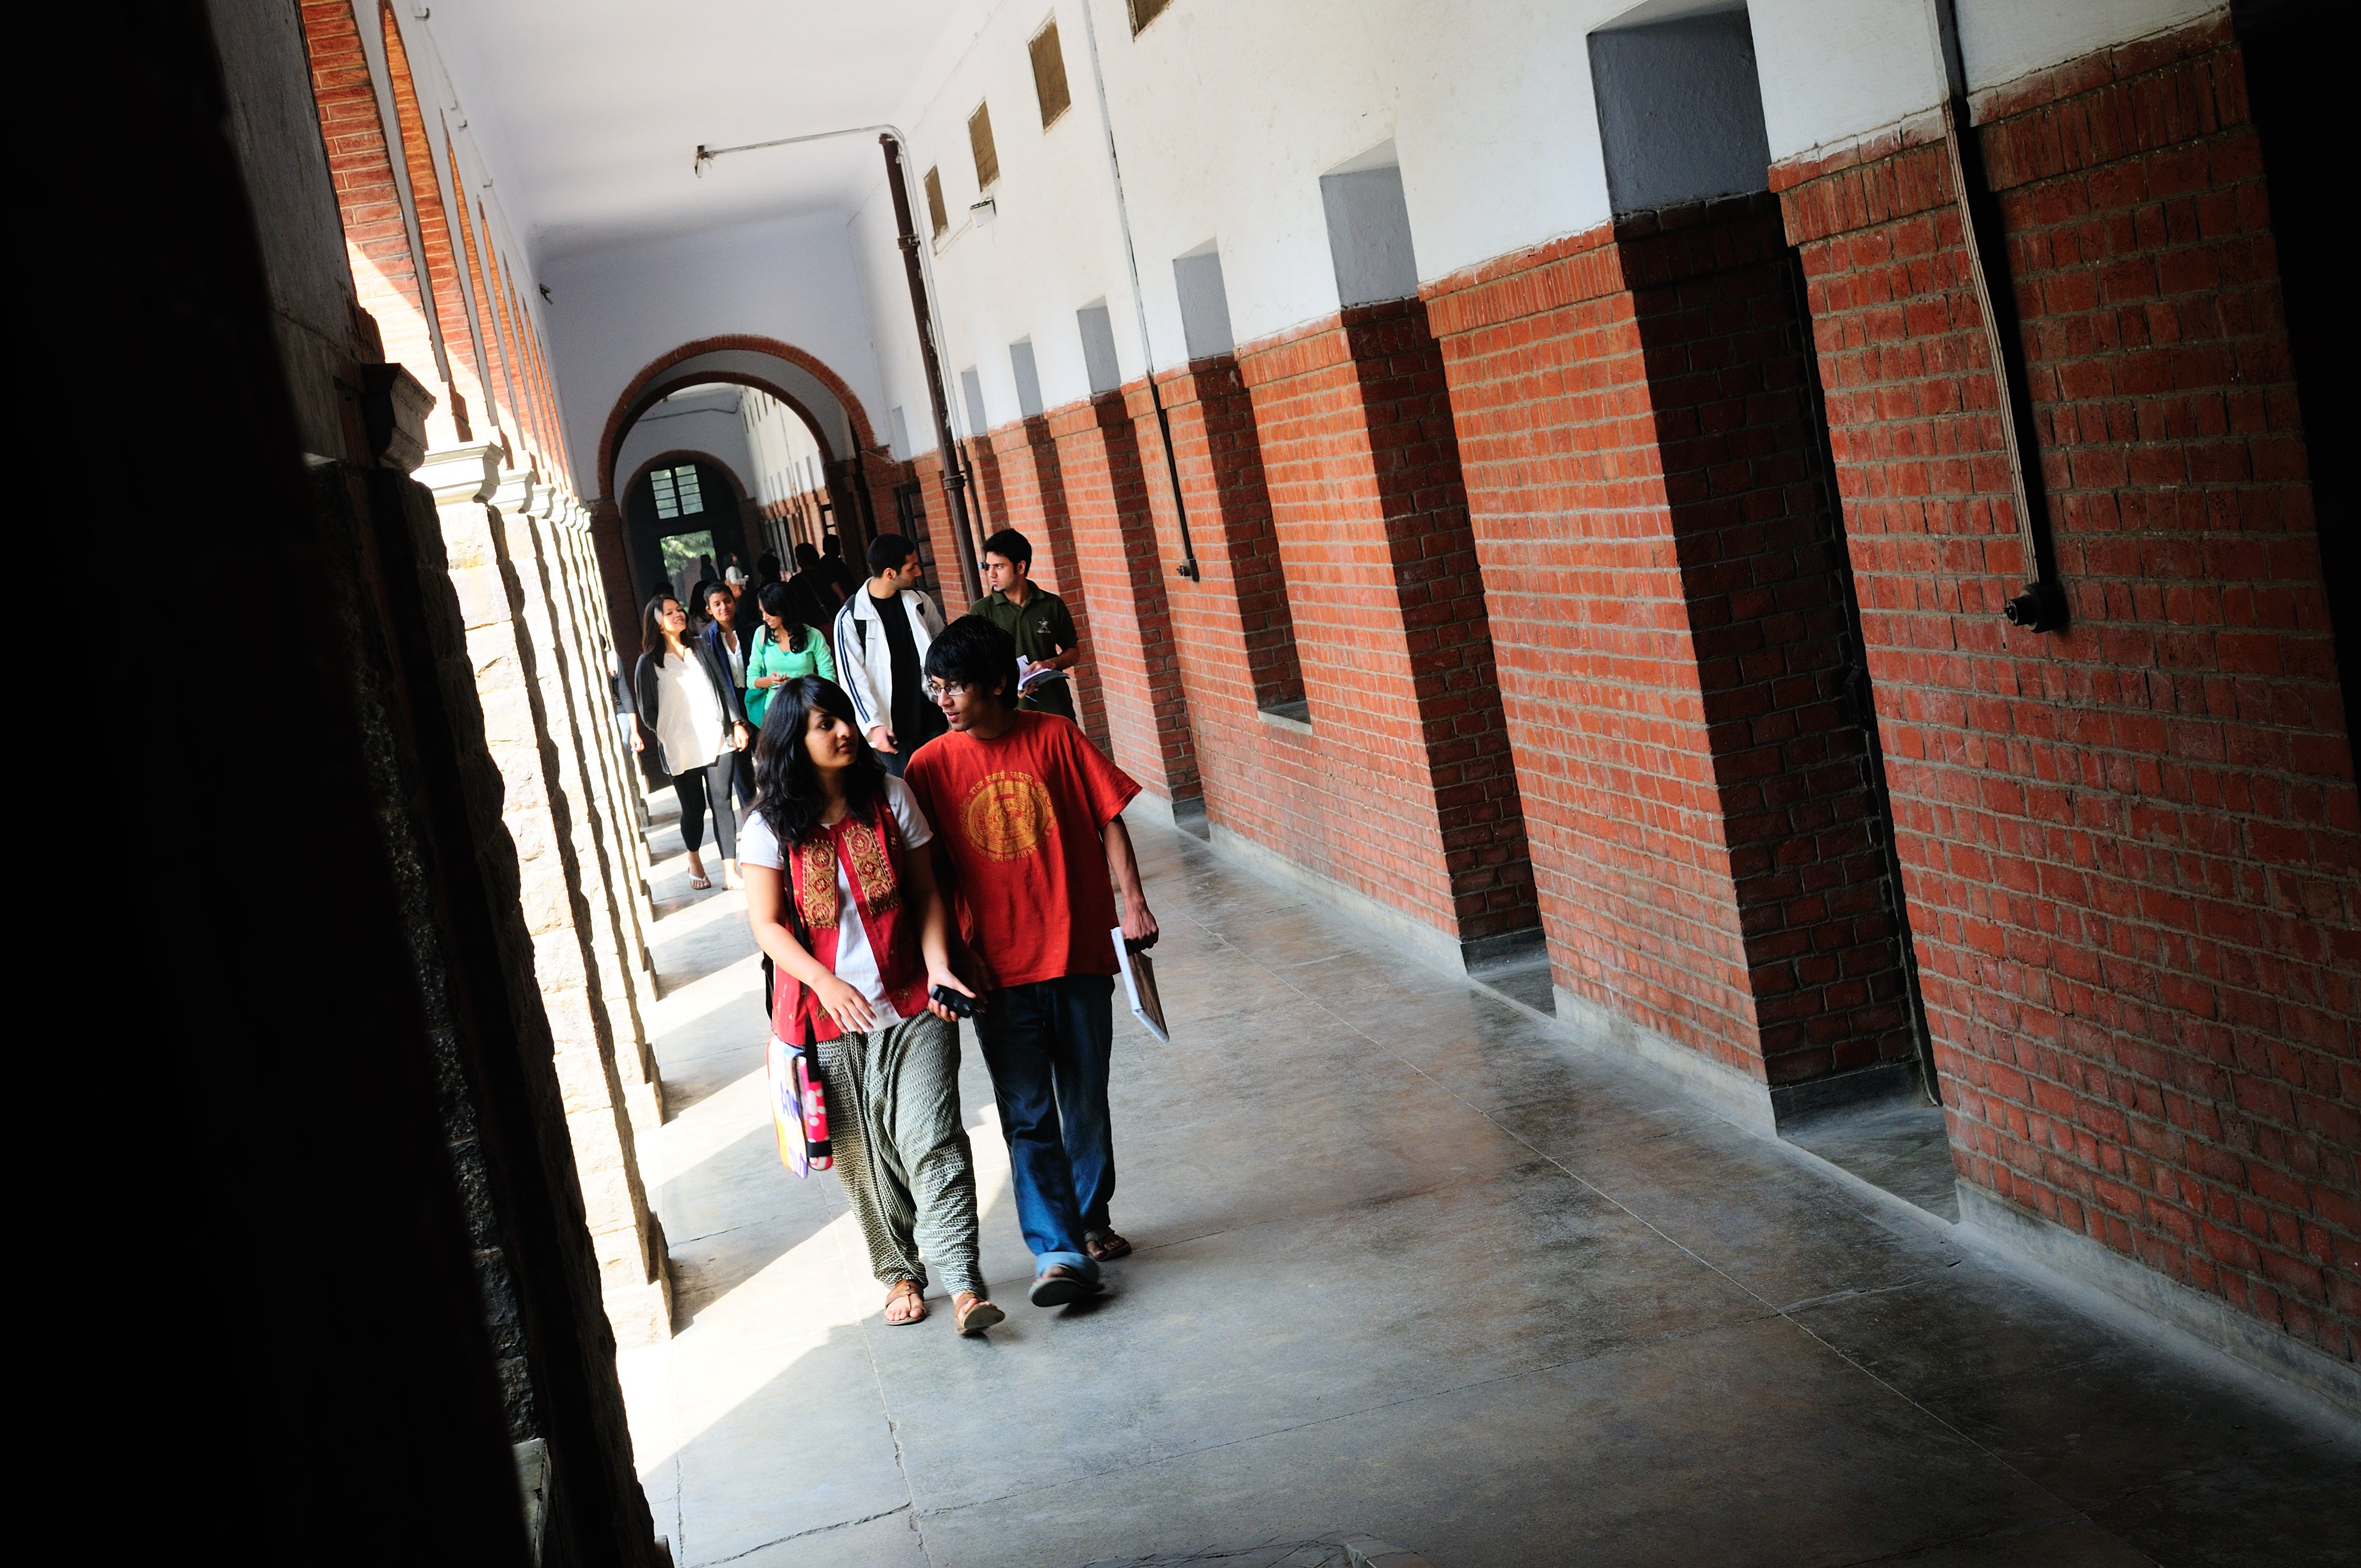 Students are seen walking the halls of Delhi’s elite St Stephen’s College